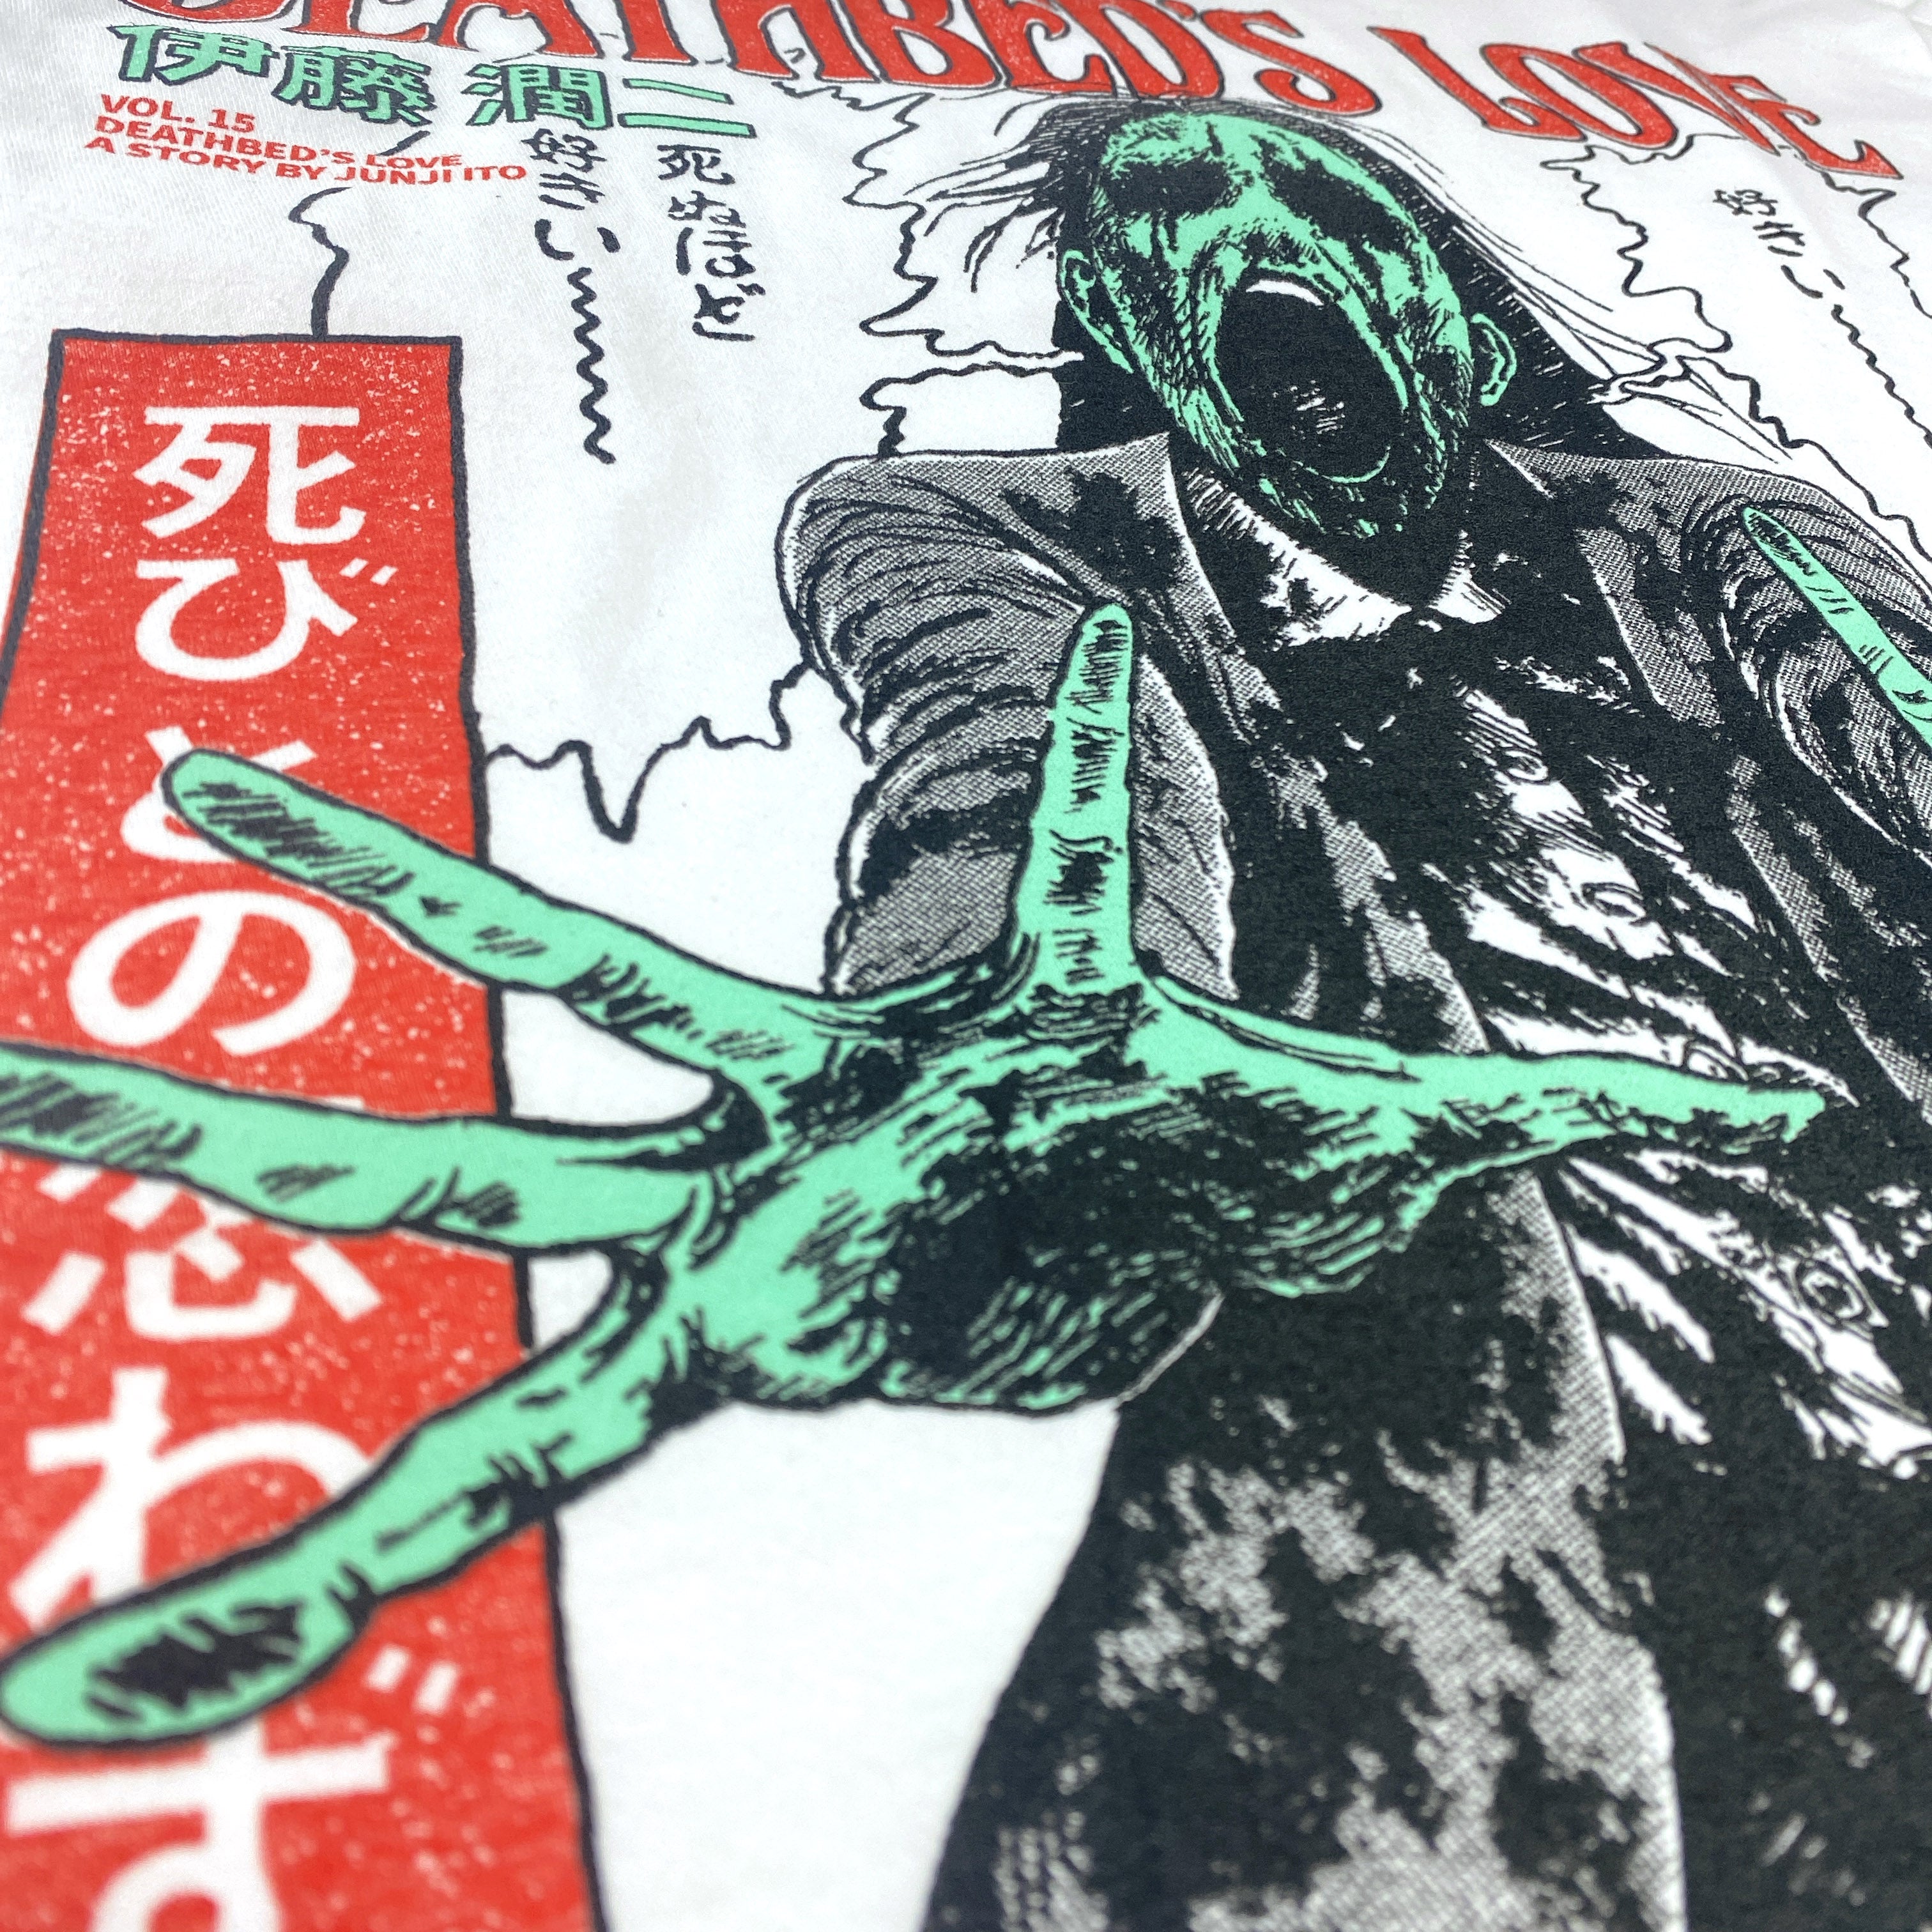 BLEACH - Ichigo Repetition Long Sleeve - Crunchyroll Exclusive!